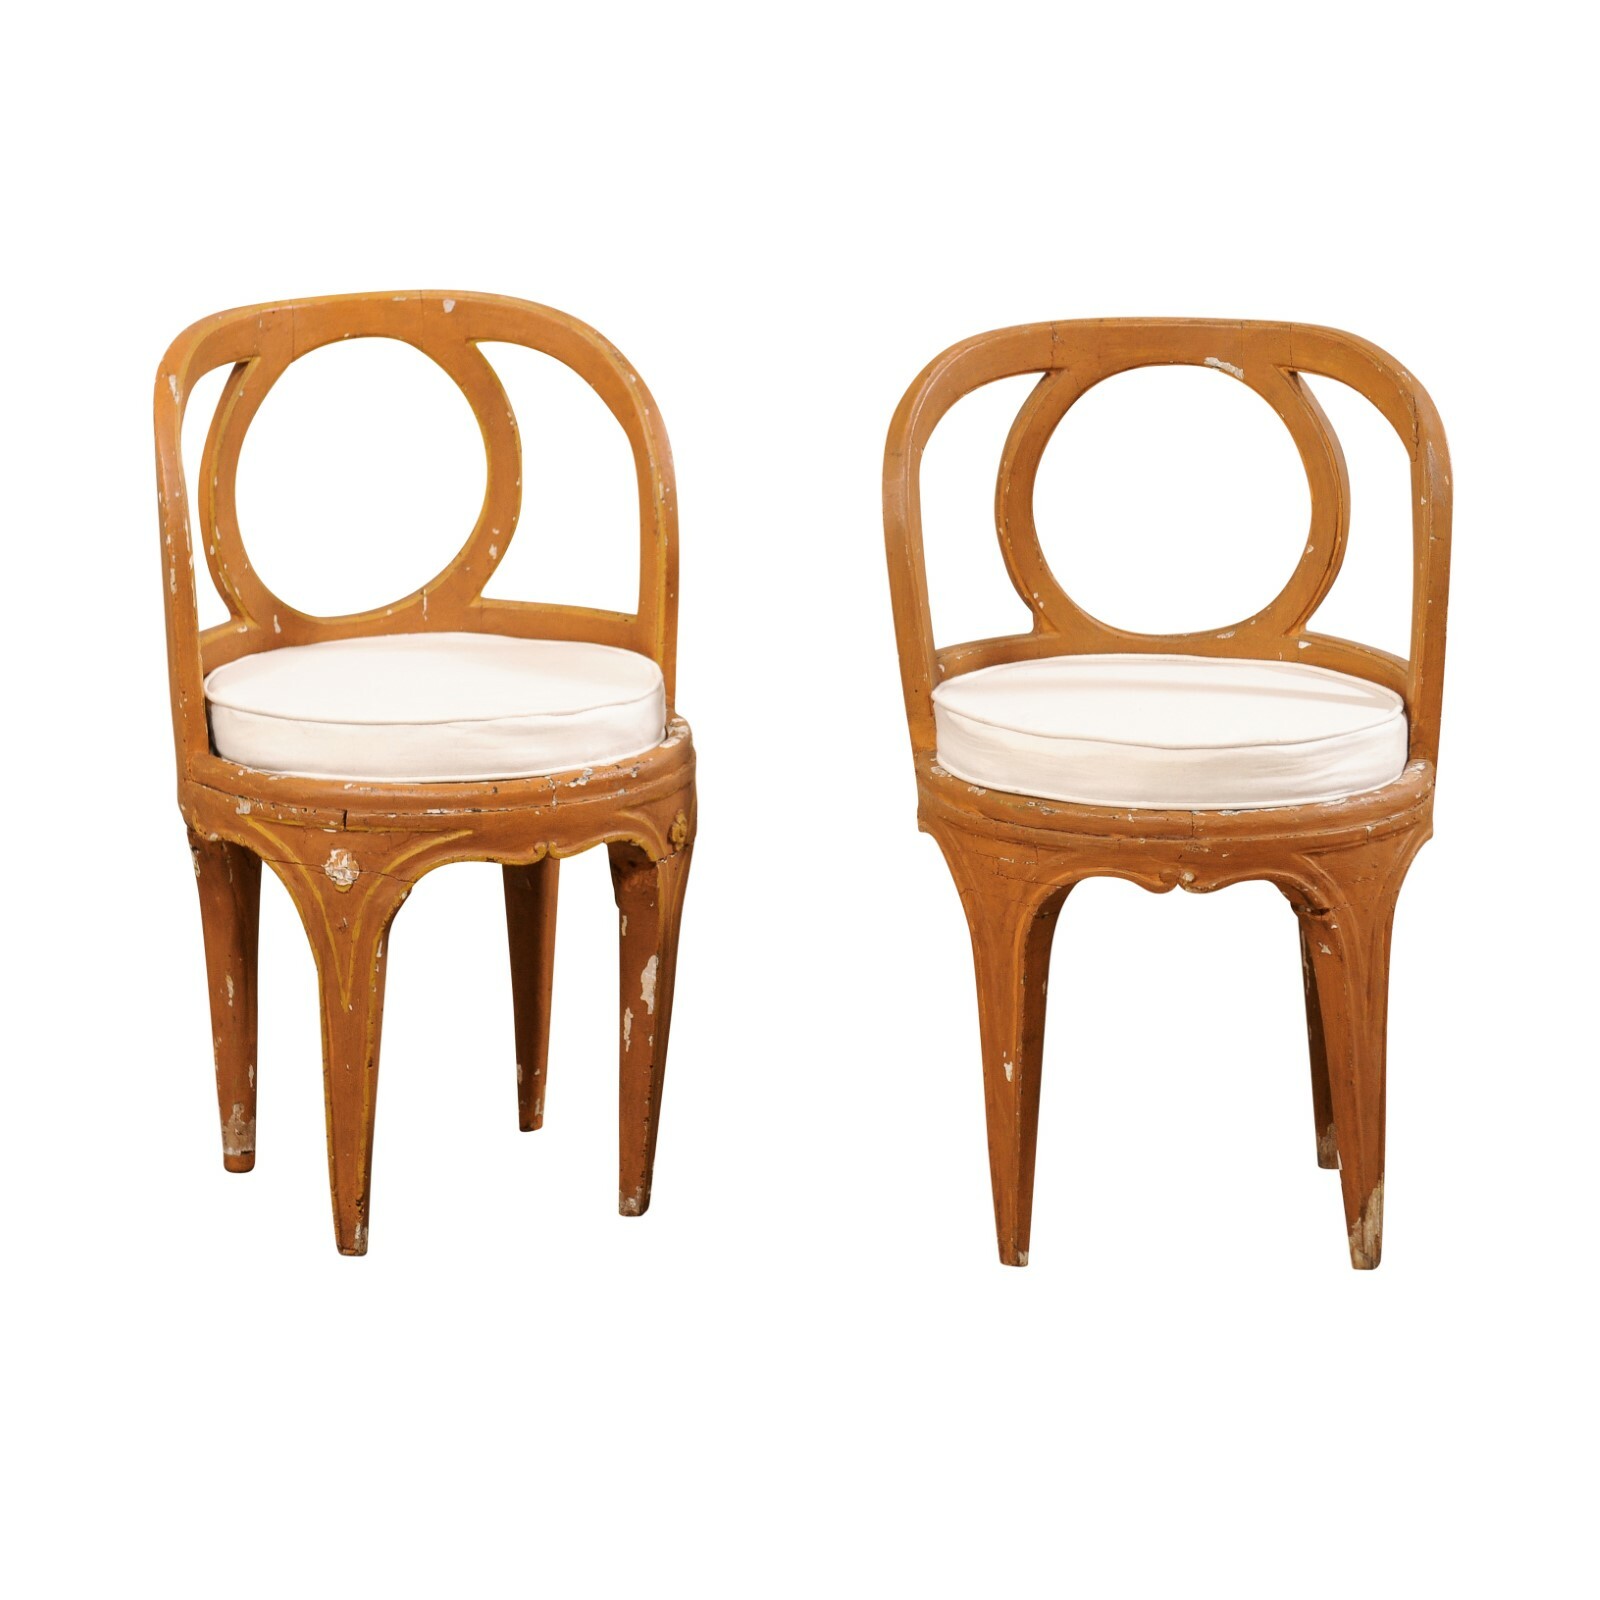 18th C. Pair of Italian Venetian Chairs